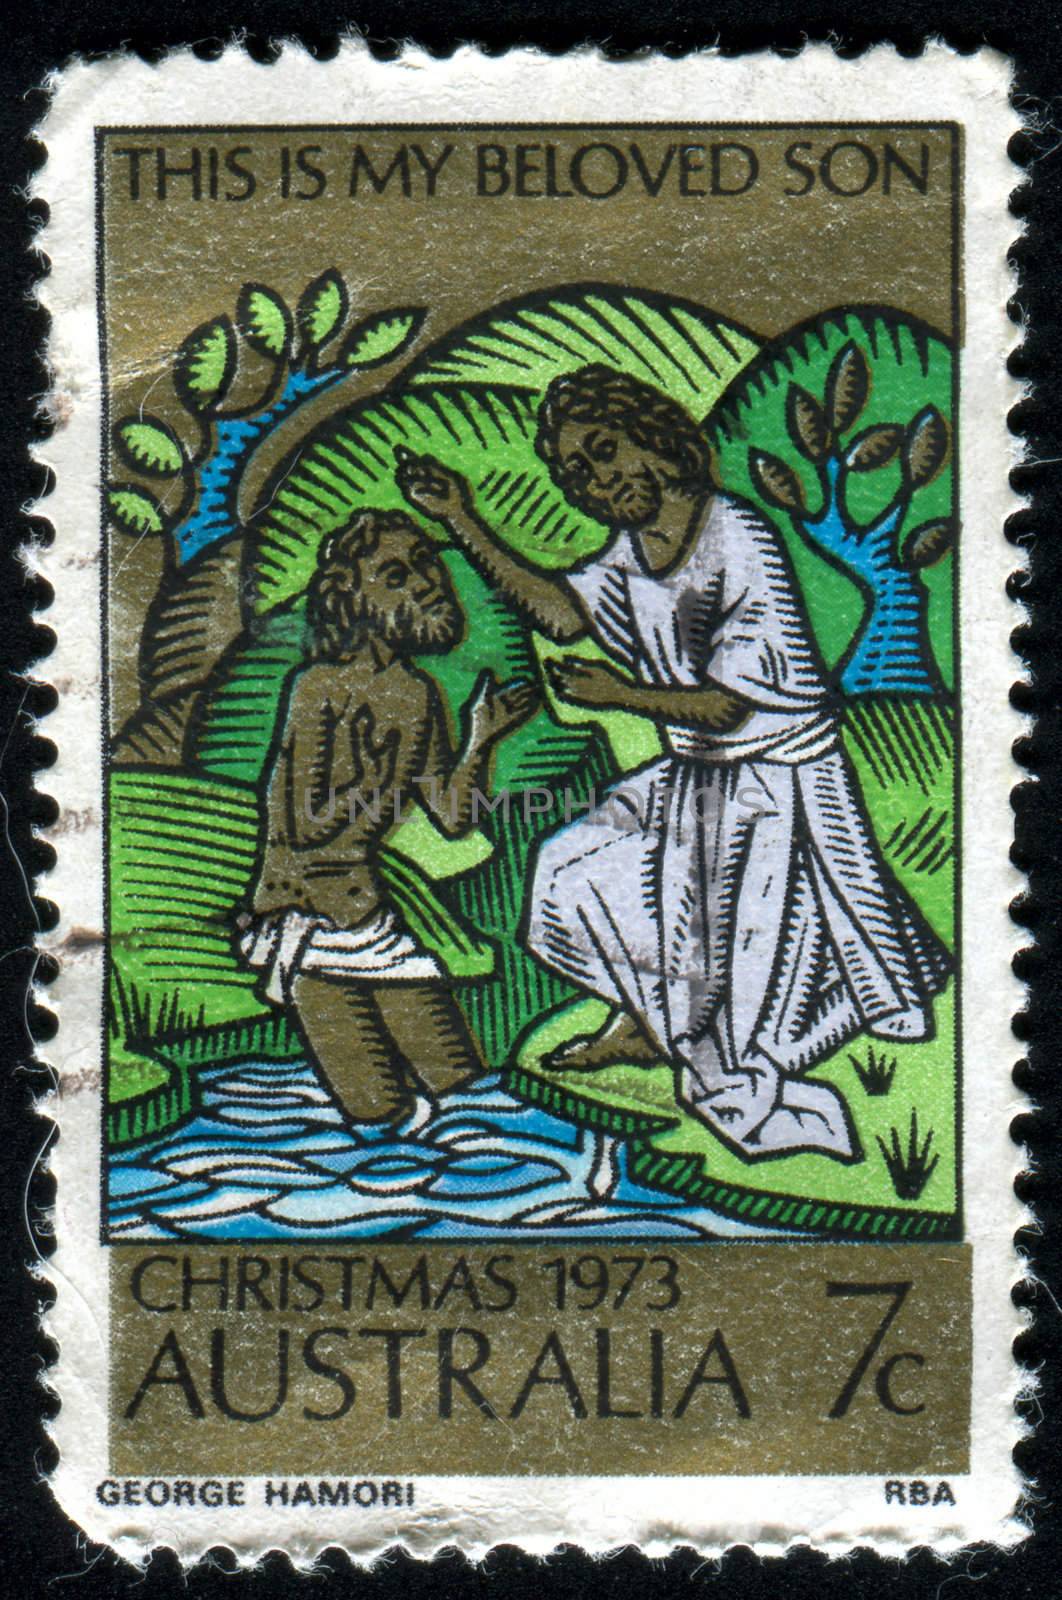 AUSTRALIA - CIRCA 1973: stamp printed by Australia, shows Baptism of Christ, circa 1973